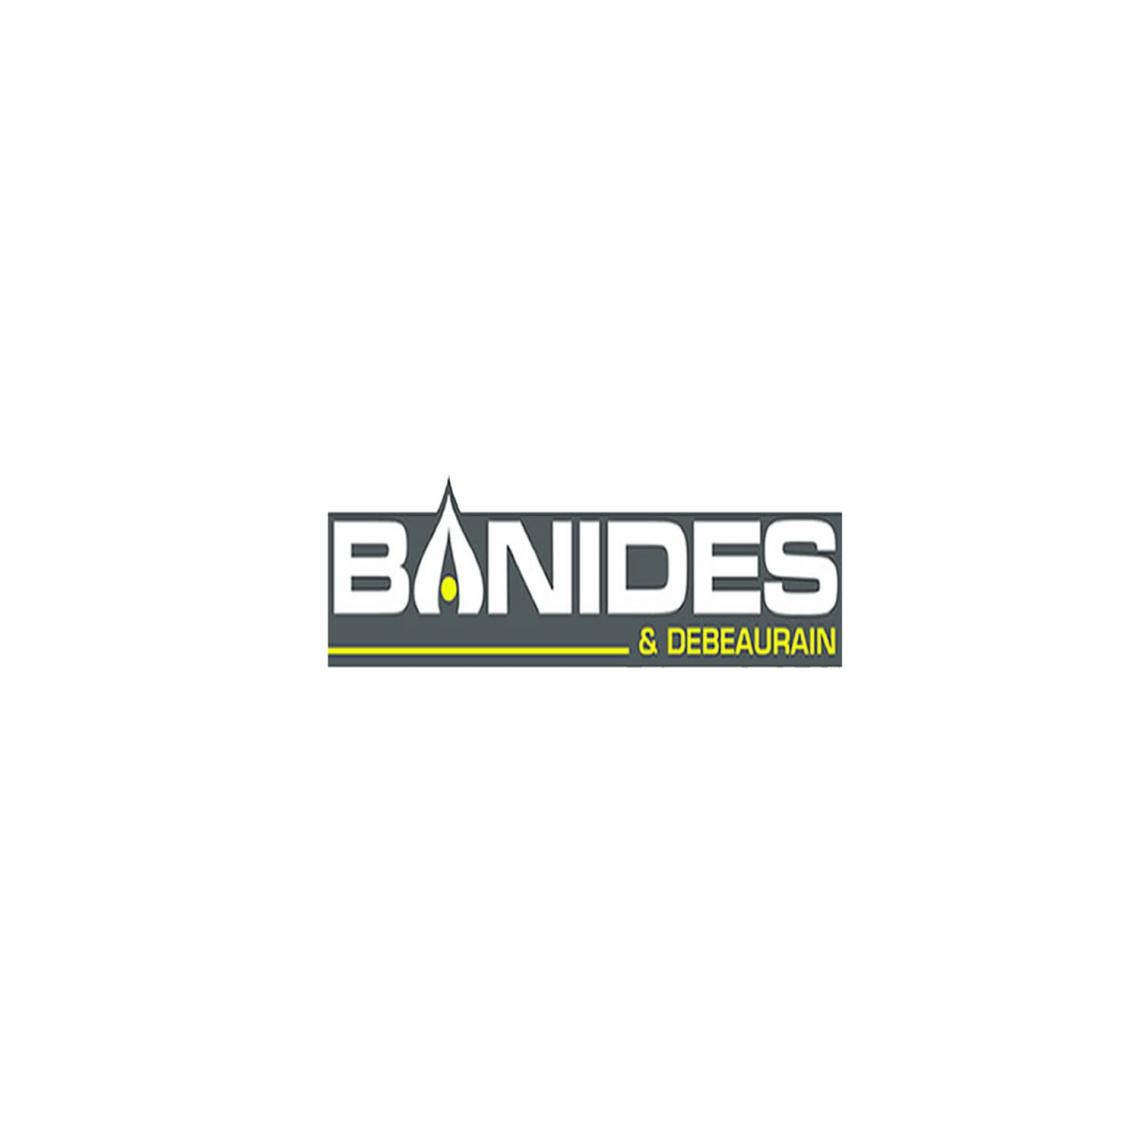 Banides & Debeaurain - raccord 3 pièces - m - conique 6,25% - 18 - 15 x 21 - nf - banides et debeaurain 75202 - Flexible gaz